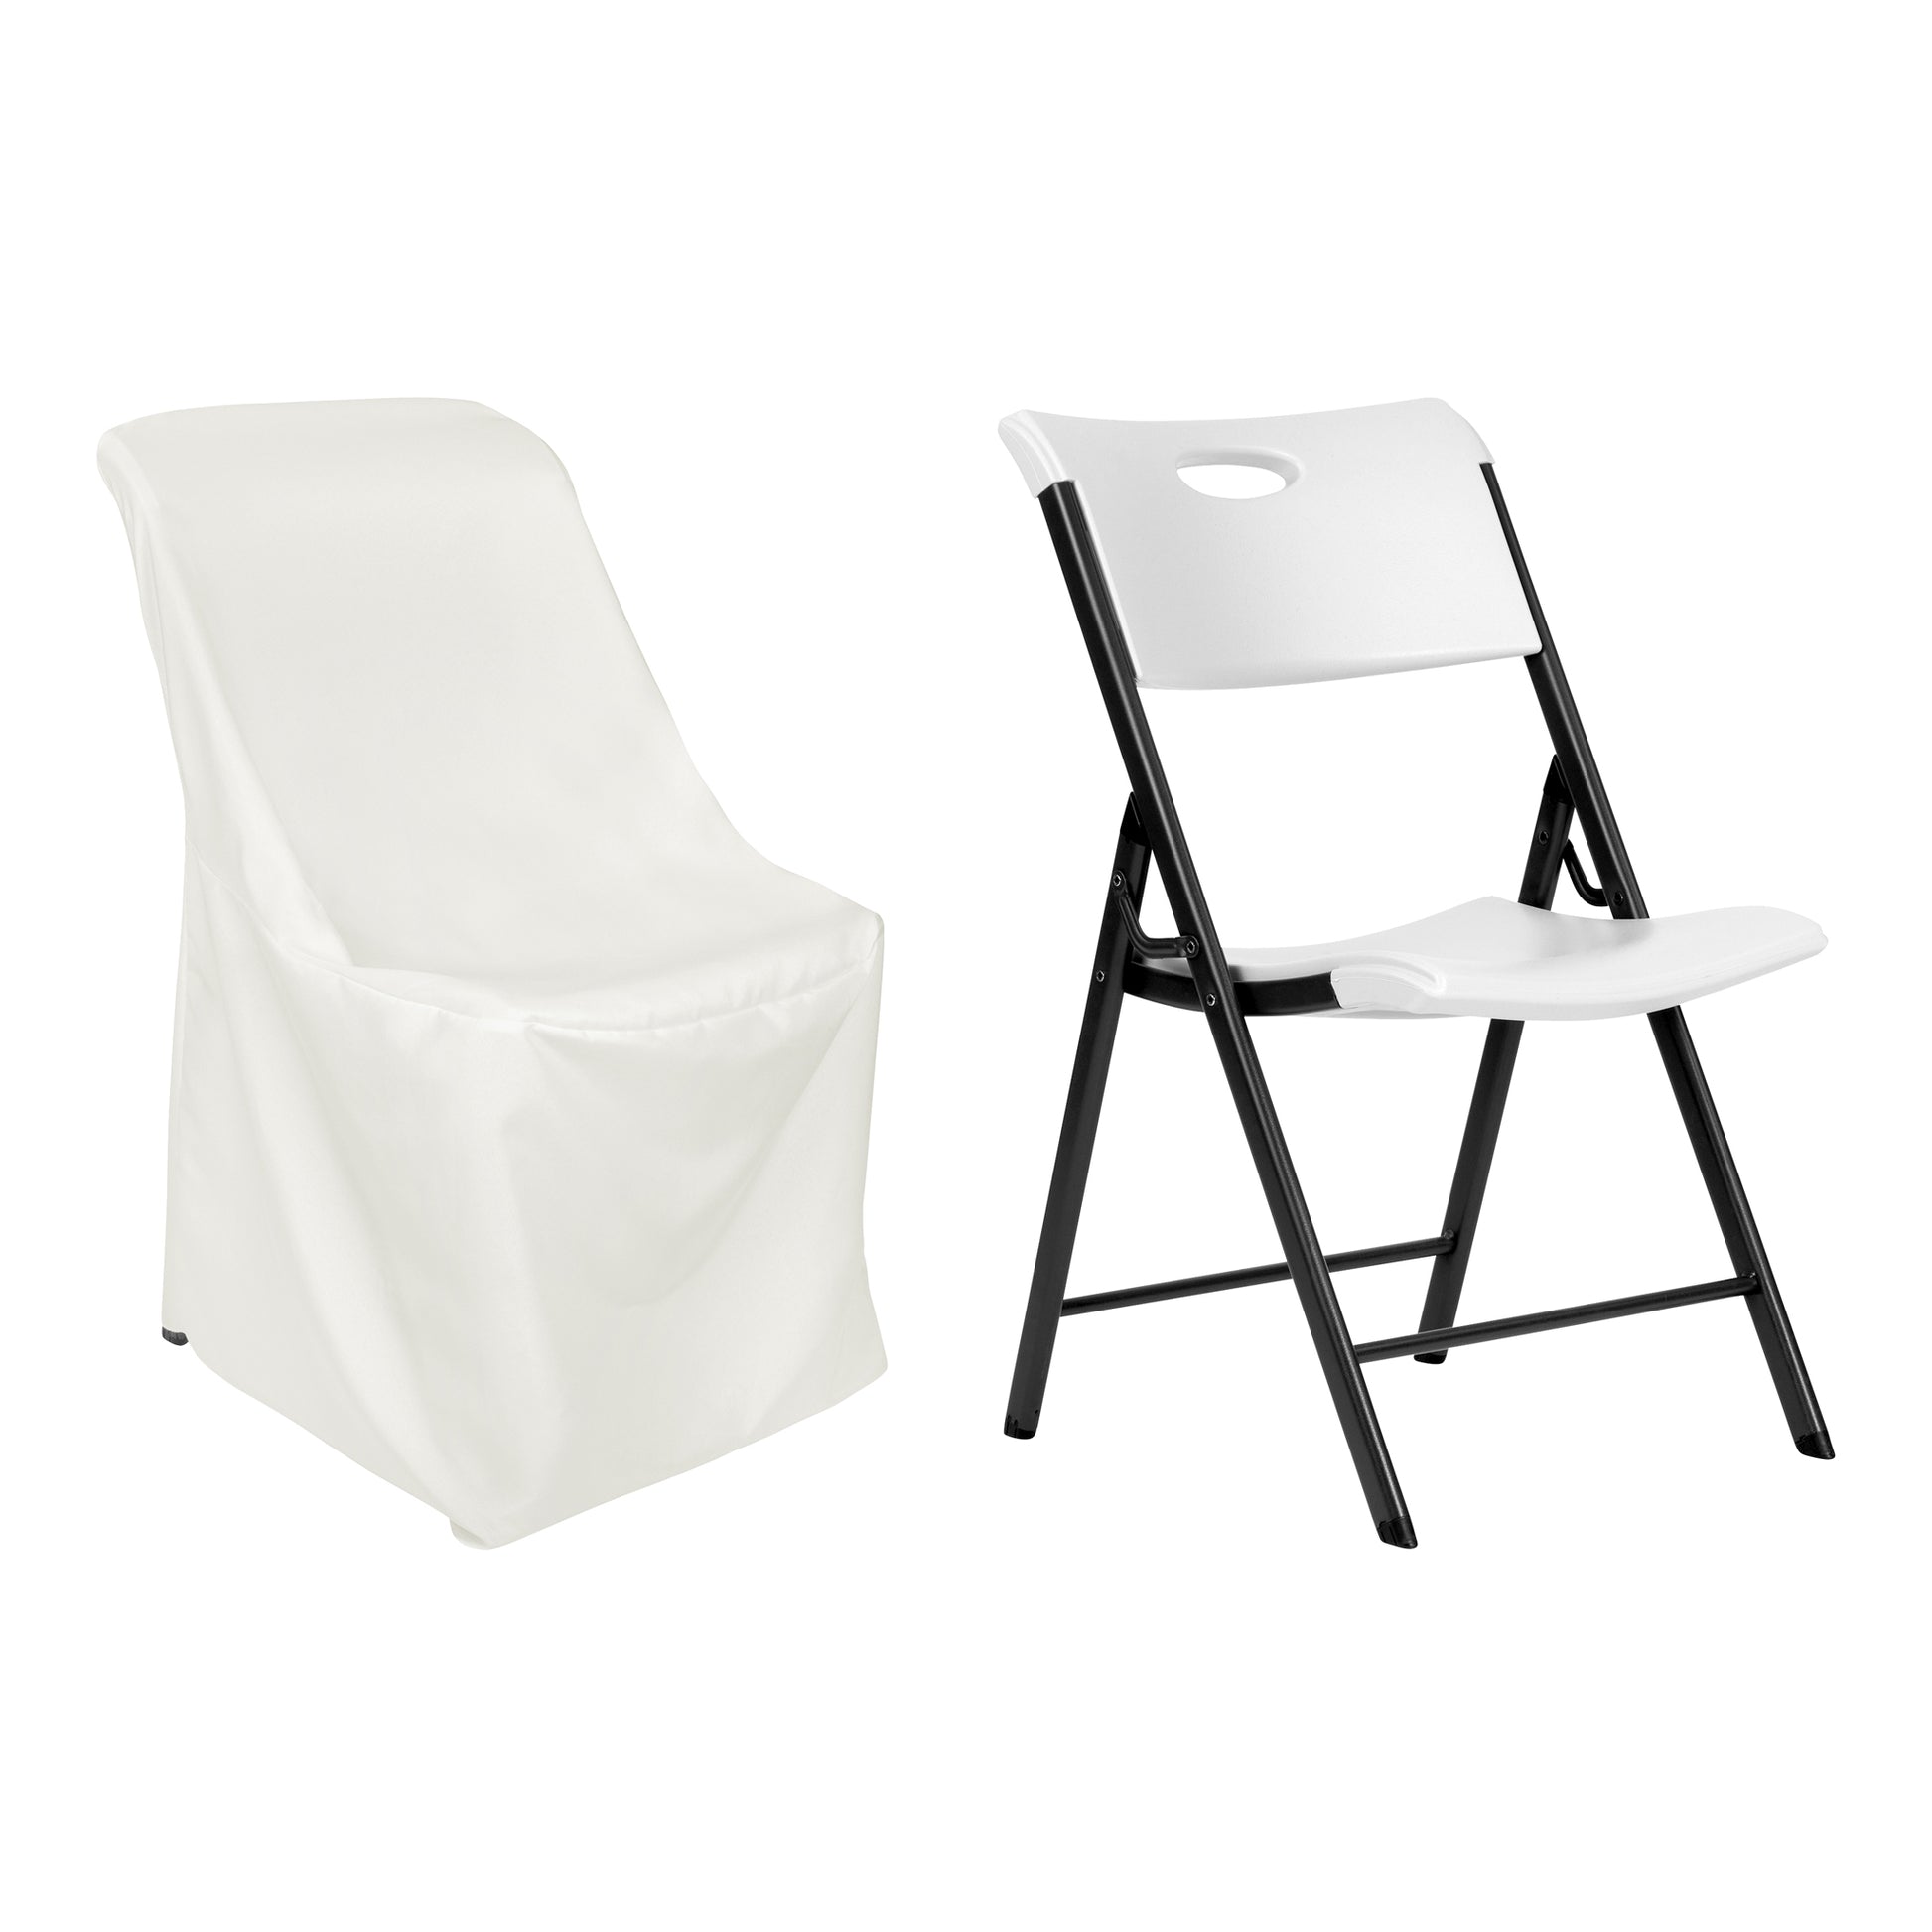 Contemporary LIFETIME folding chair Cover - Ivory - CV Linens